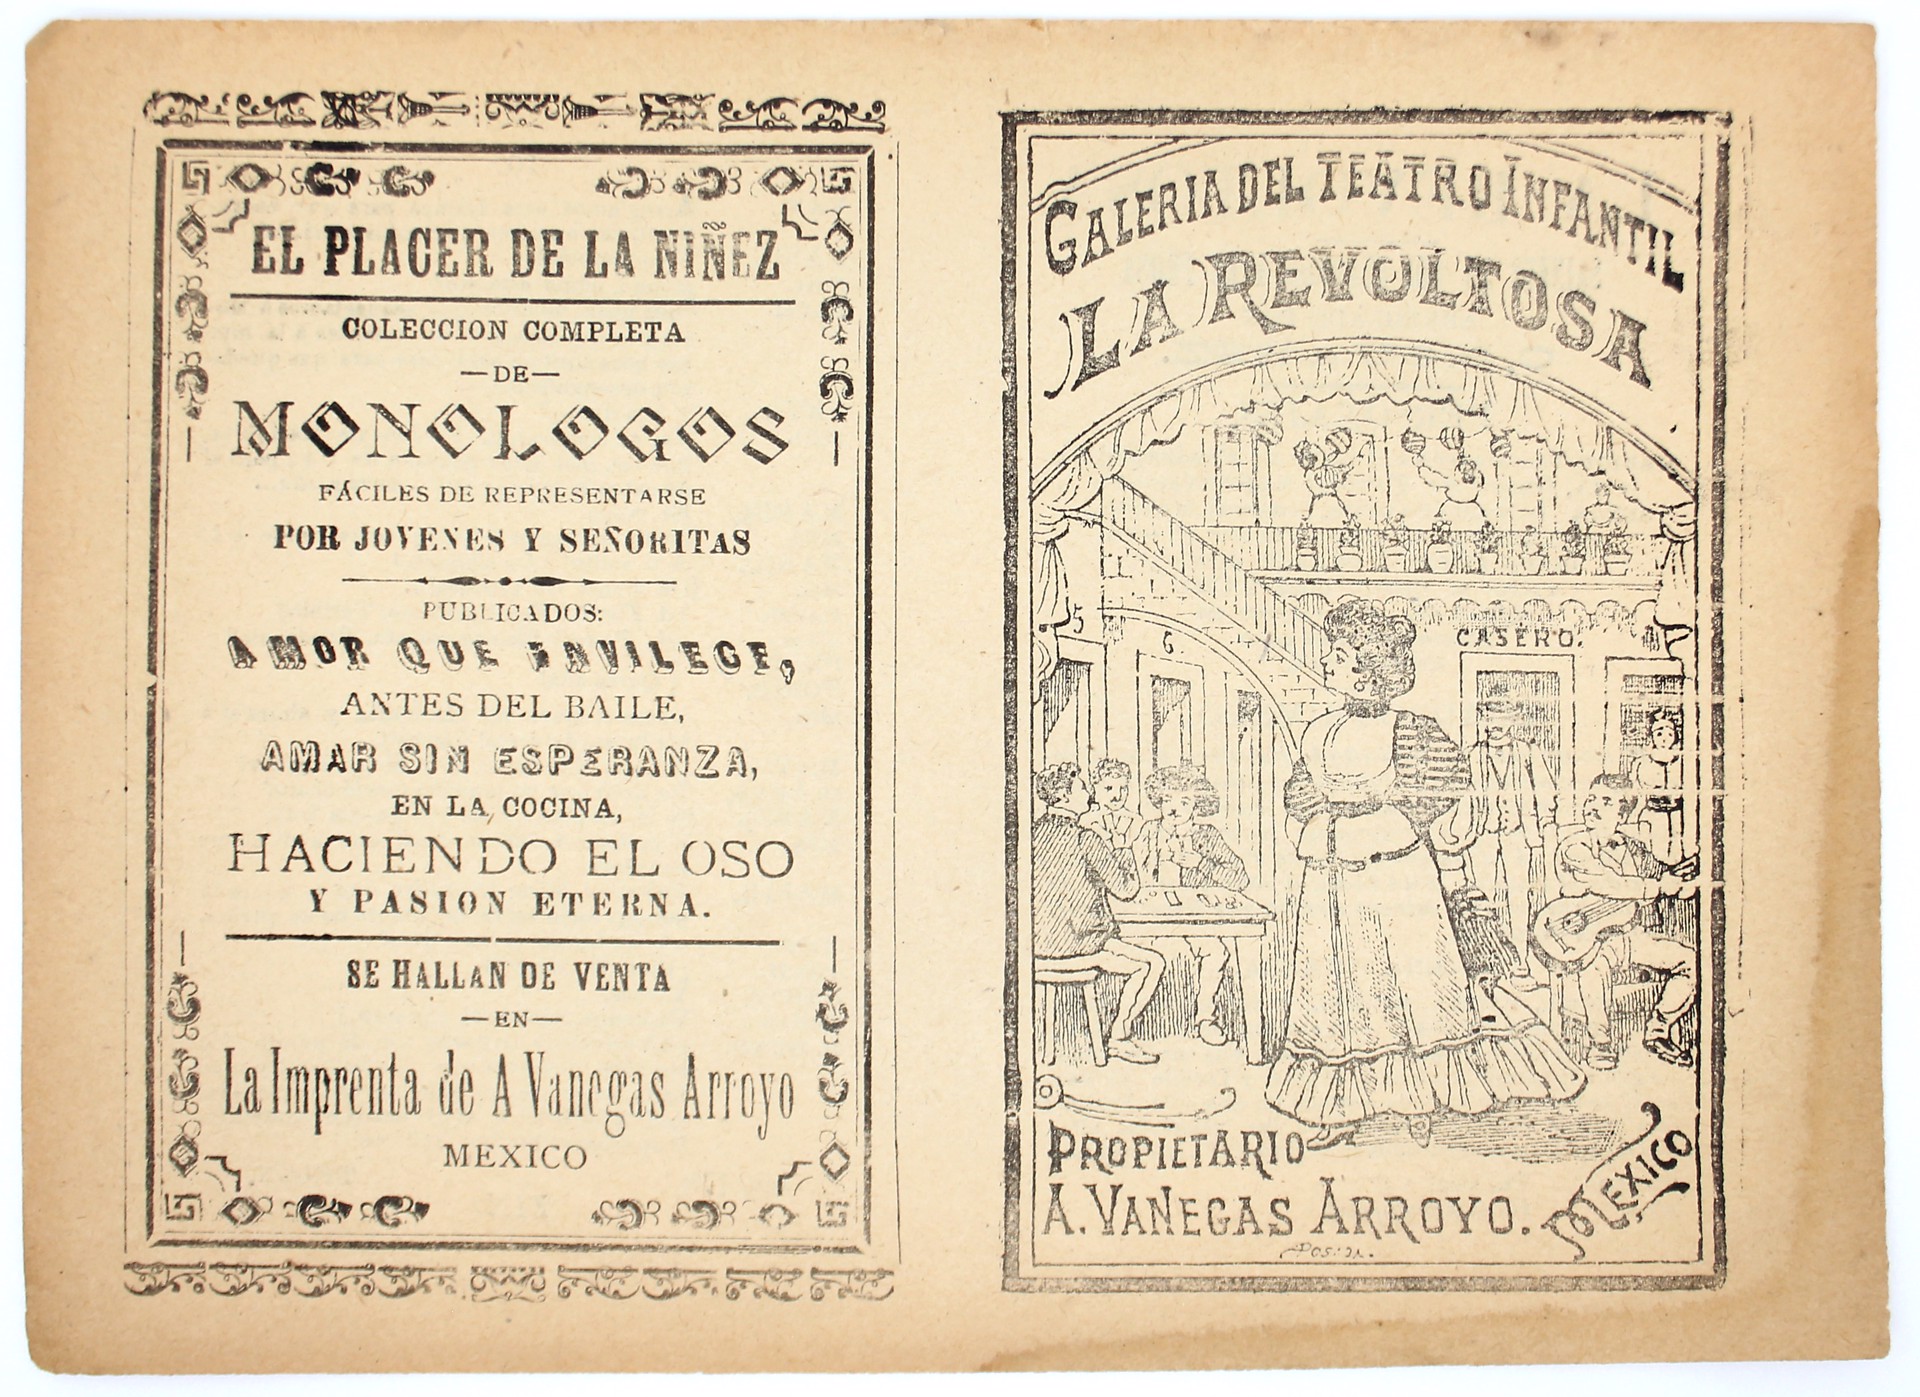 La Revoltosa by José Guadalupe Posada